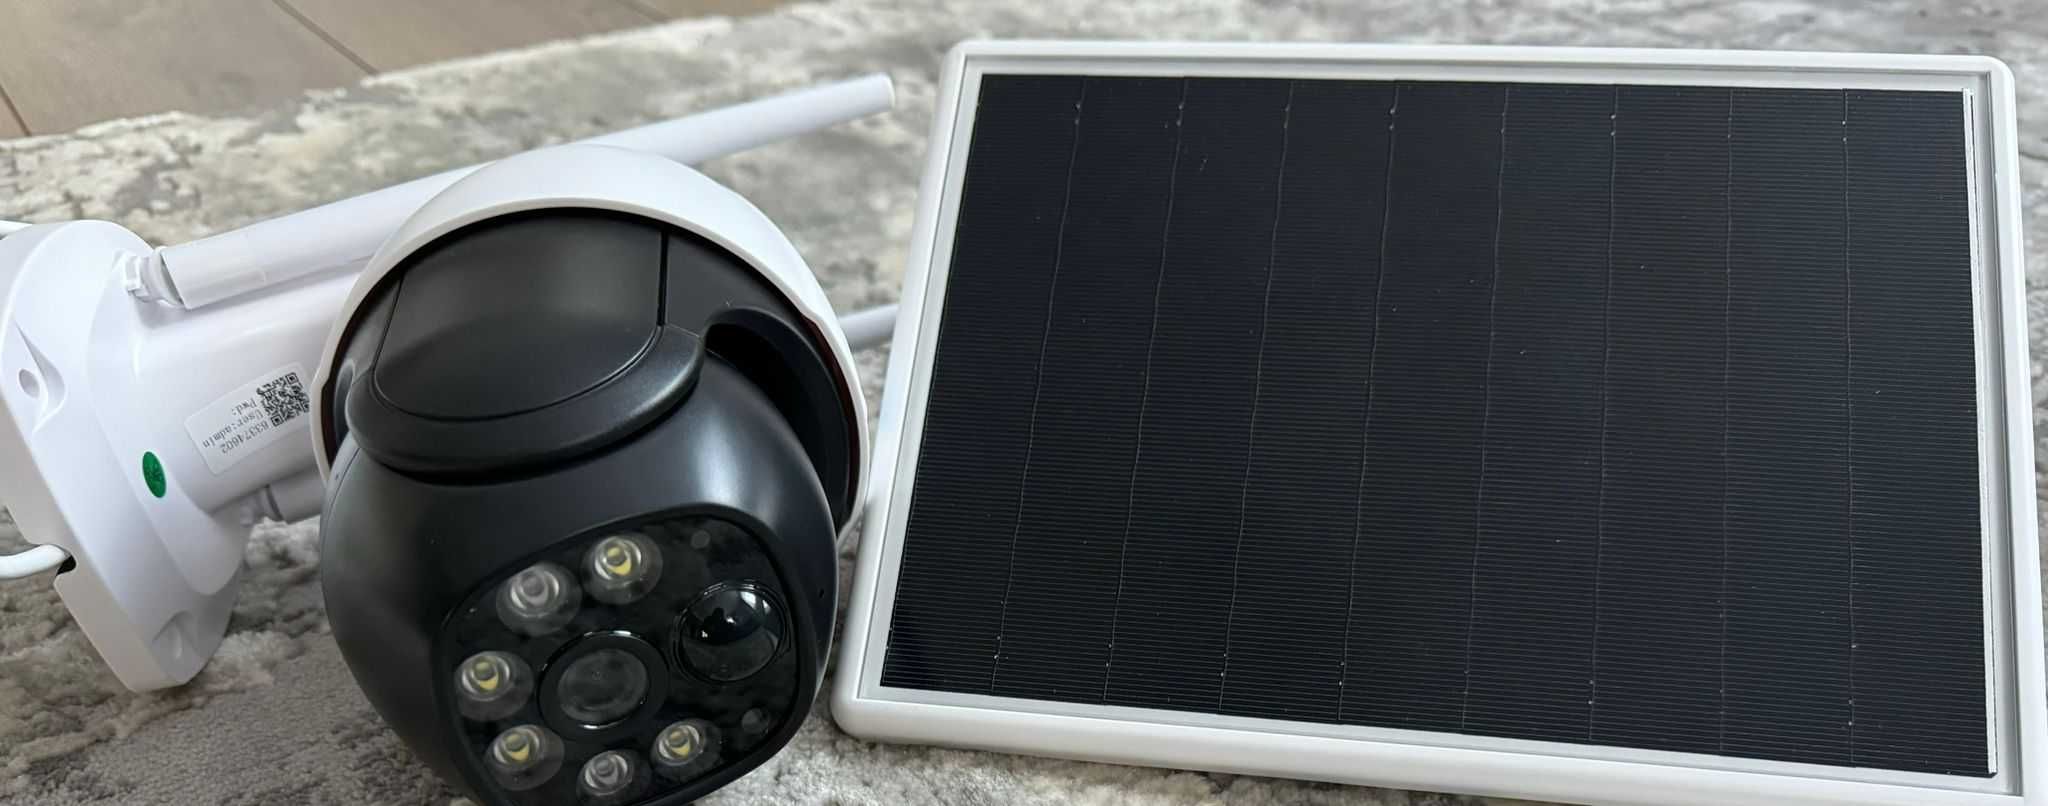 Camera de Supraveghere 4G cartela Sim cu Panou Solar, Full HD 1080p